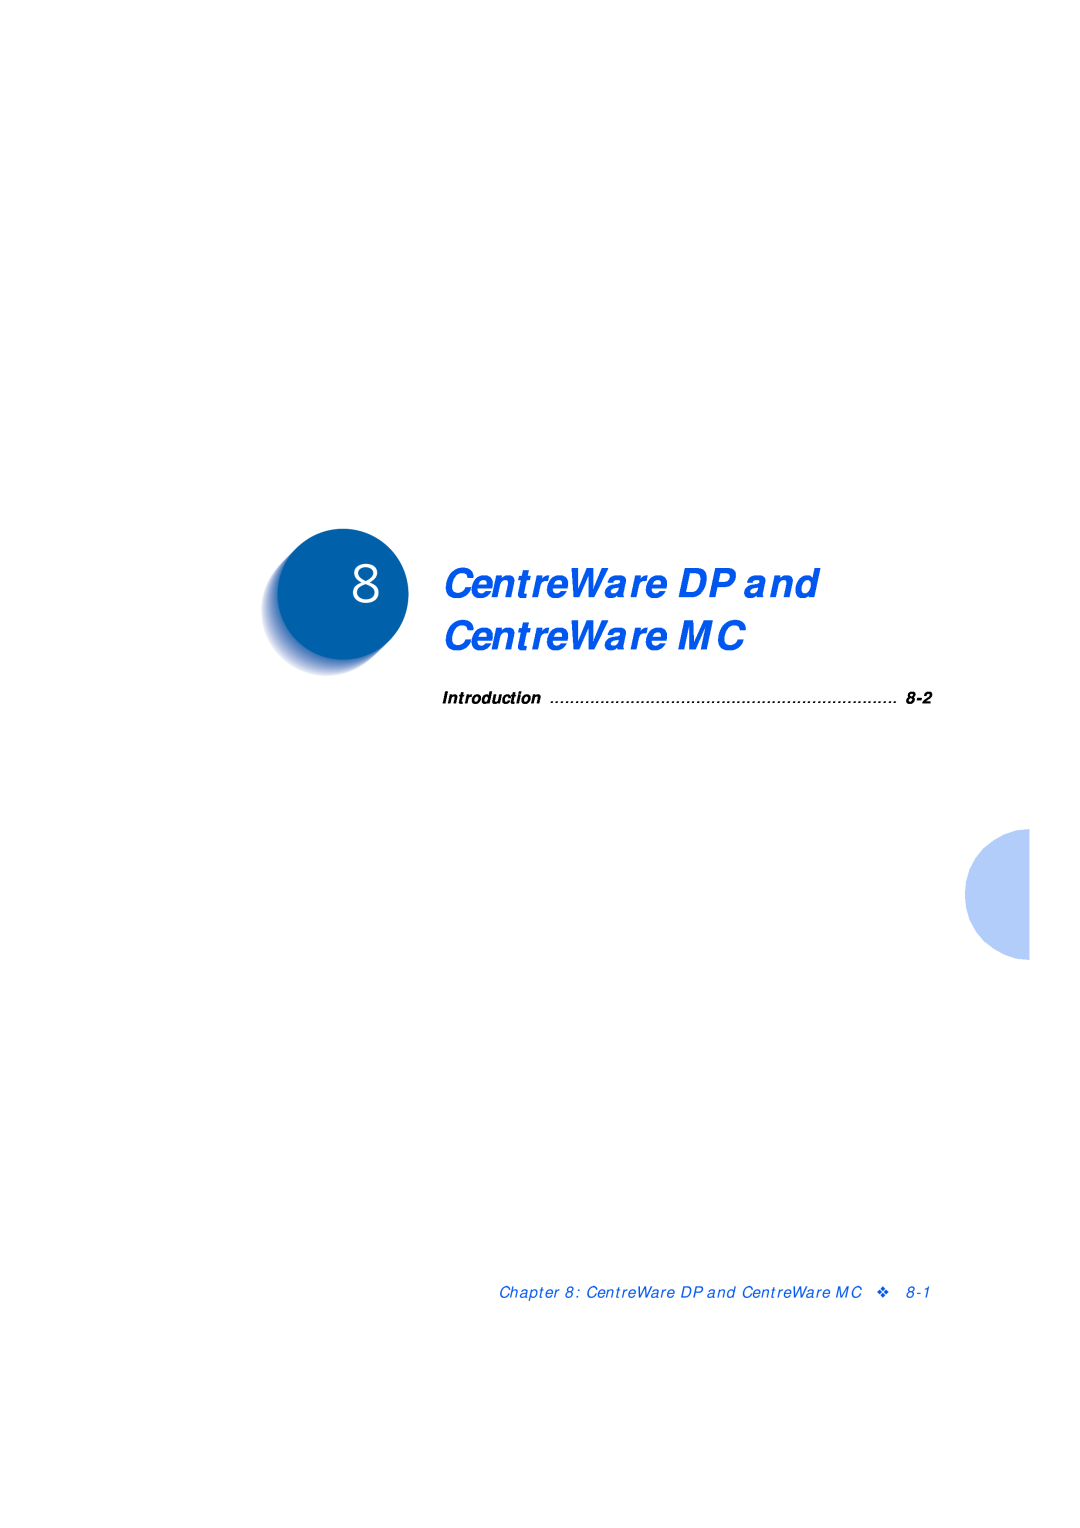 Xerox Network Laser Printers manual CentreWare DP and CentreWare MC, Introduction 